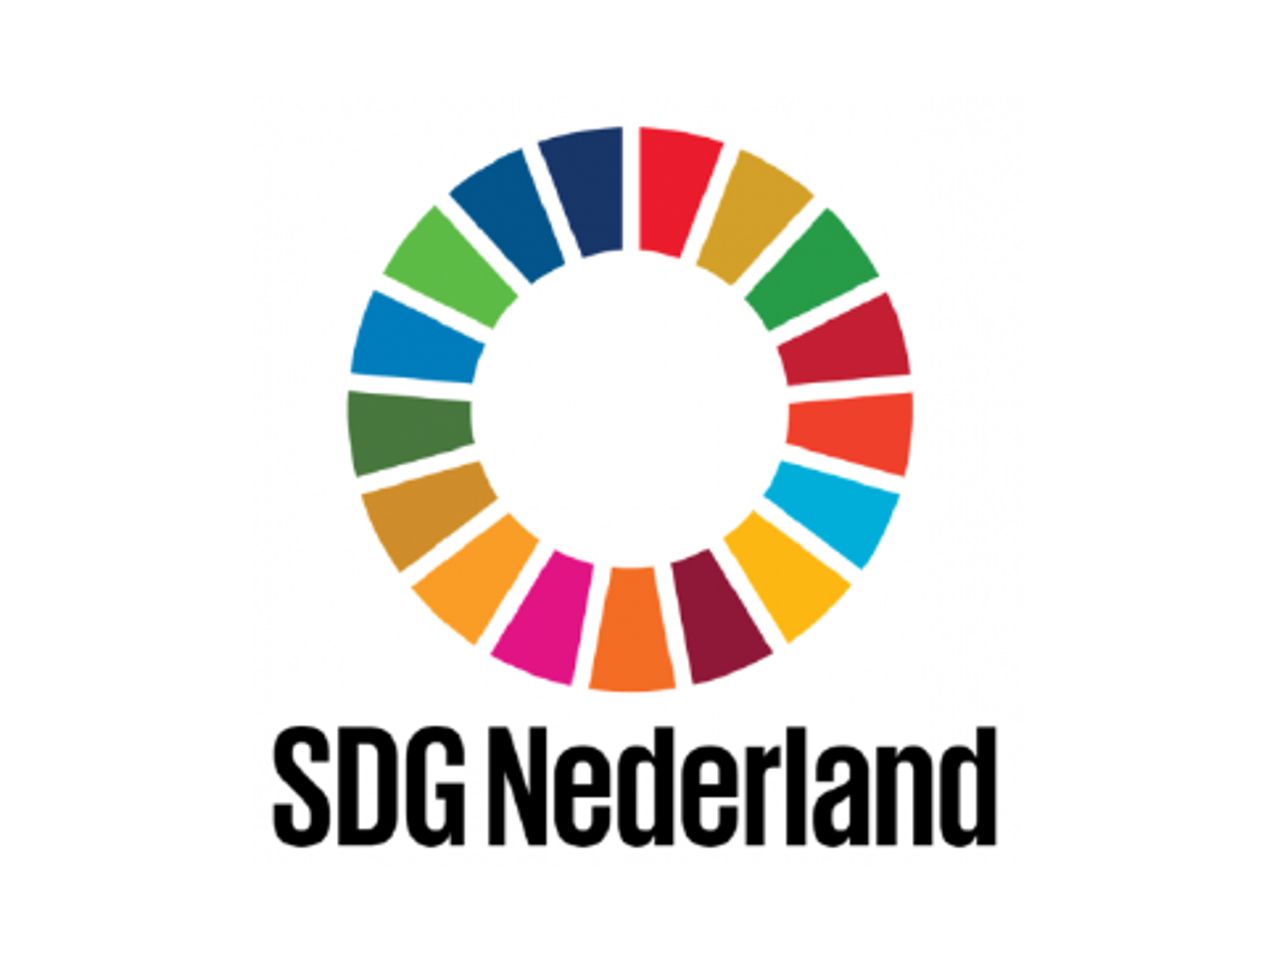 Communities SDG Nederland